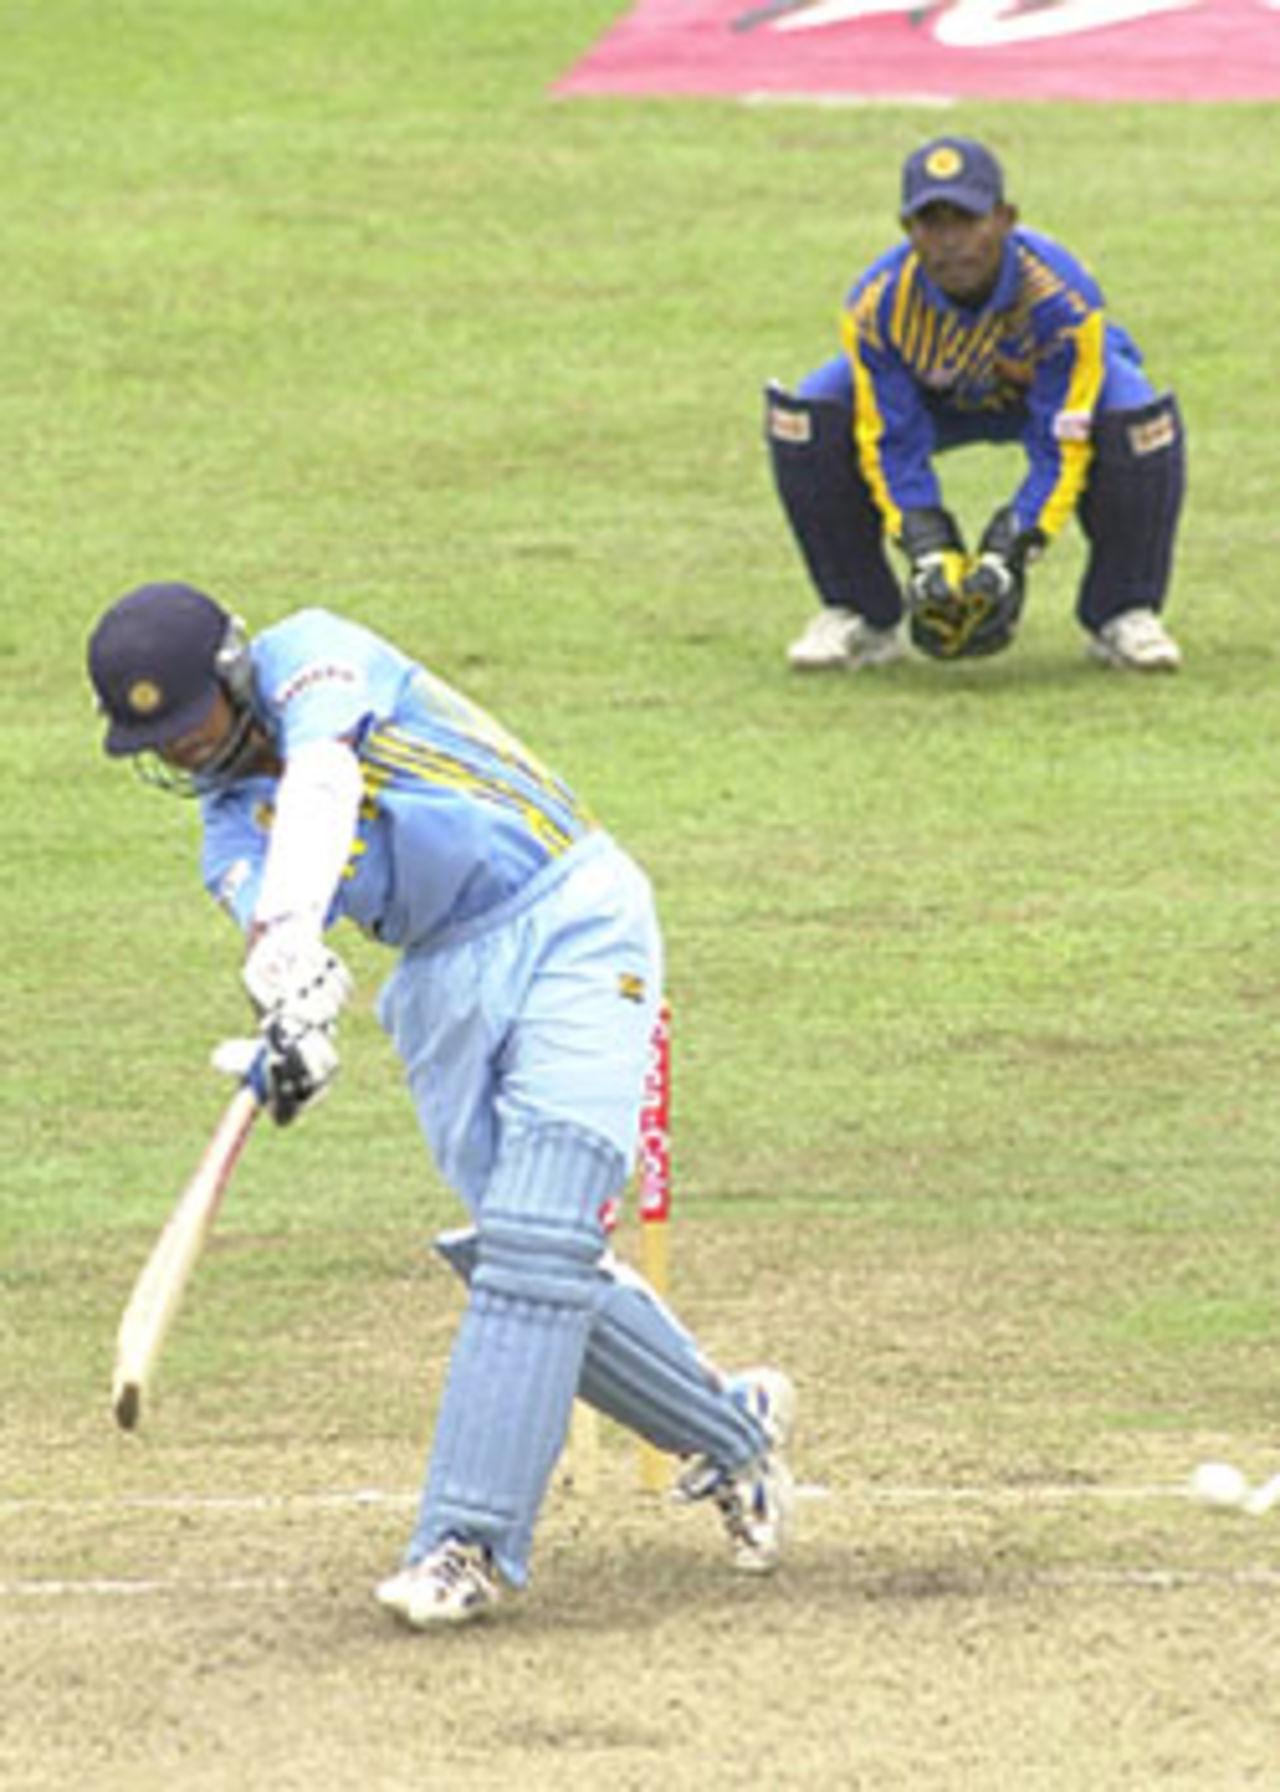 1 August 2001: Coca-Cola Cup (Sri Lanka) 2001, 8th Match, India v Sri Lanka, Sinhalese Sports Club, Colombo